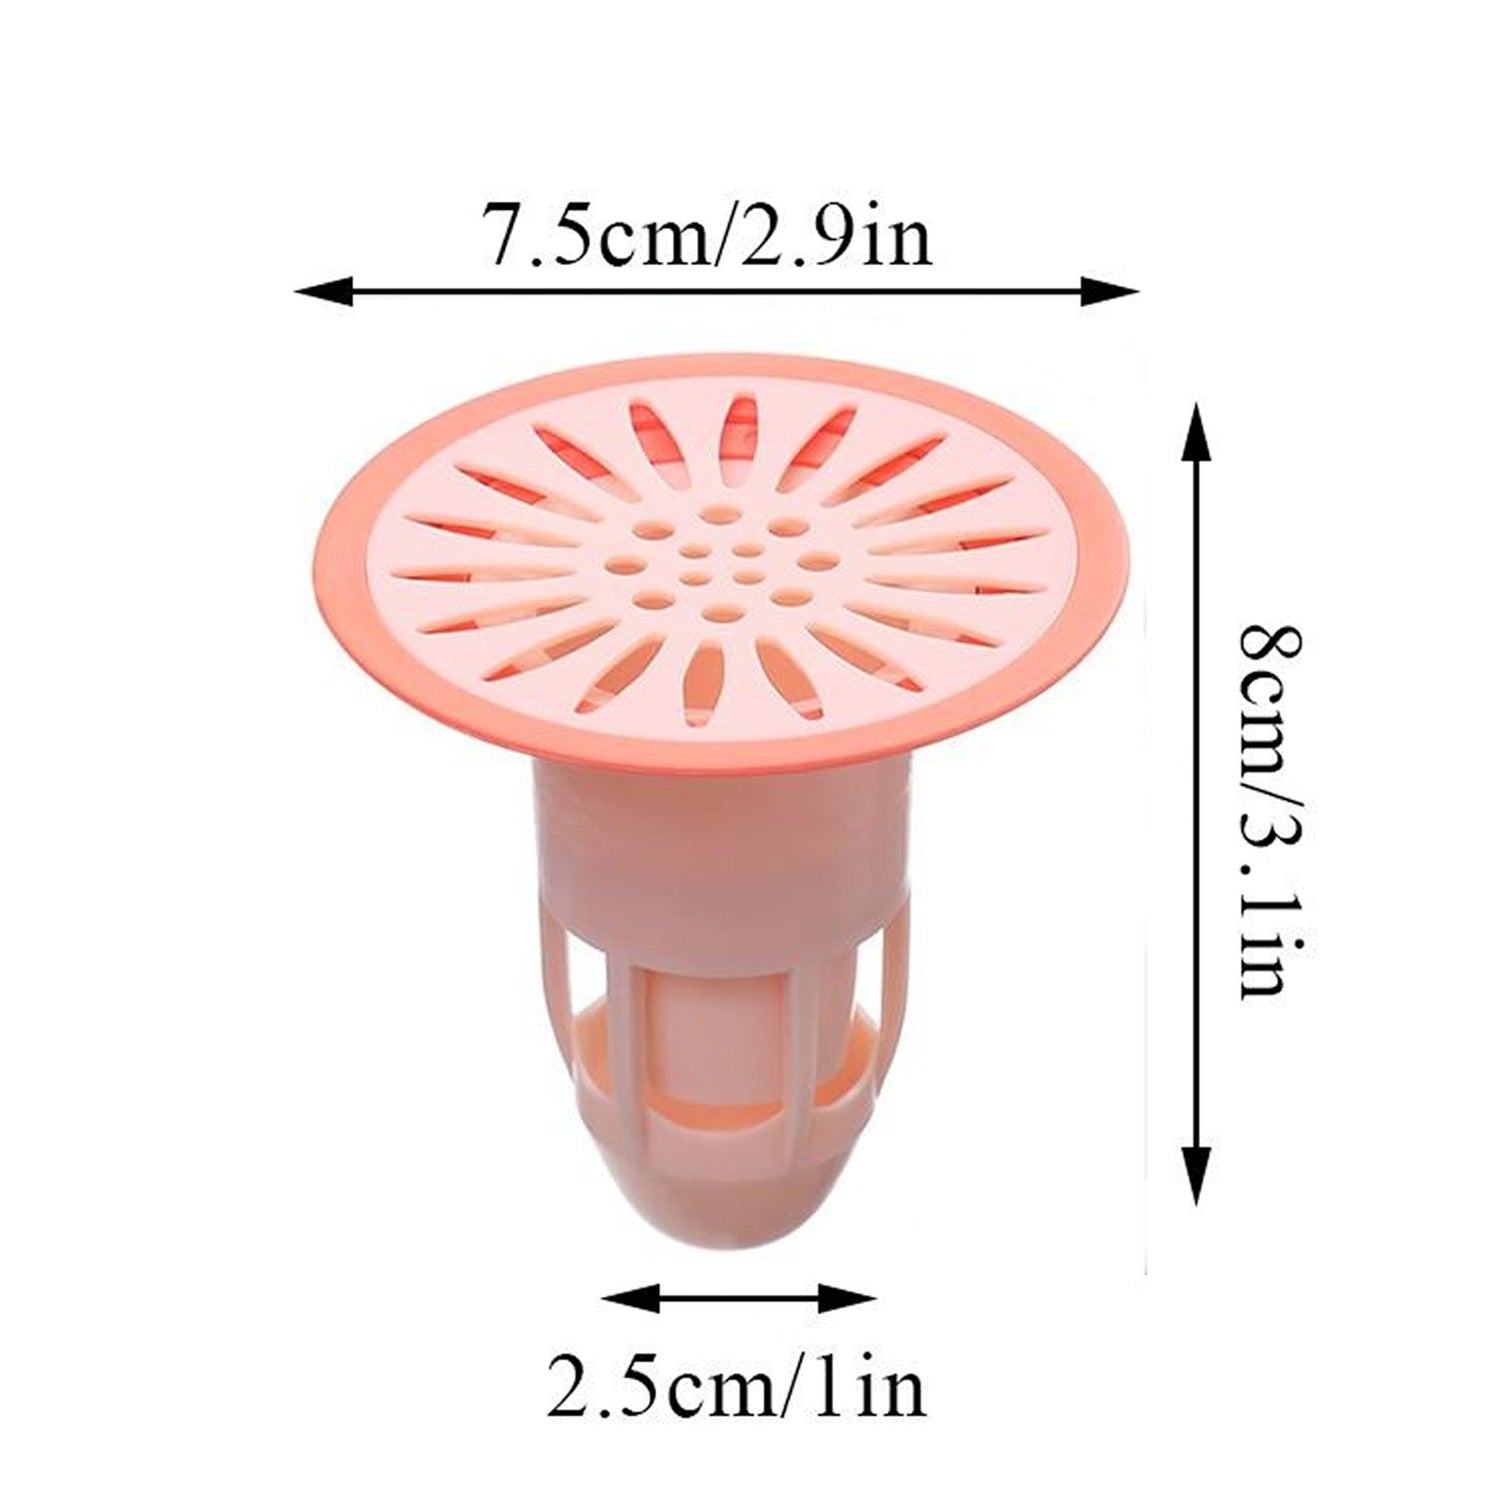 7968 Deodorant Floor Drain Core Silicone Drain Stopper Insectproof Anti-Odor Hair Trap Plug Trap for Kitchen Bathroom Toilet